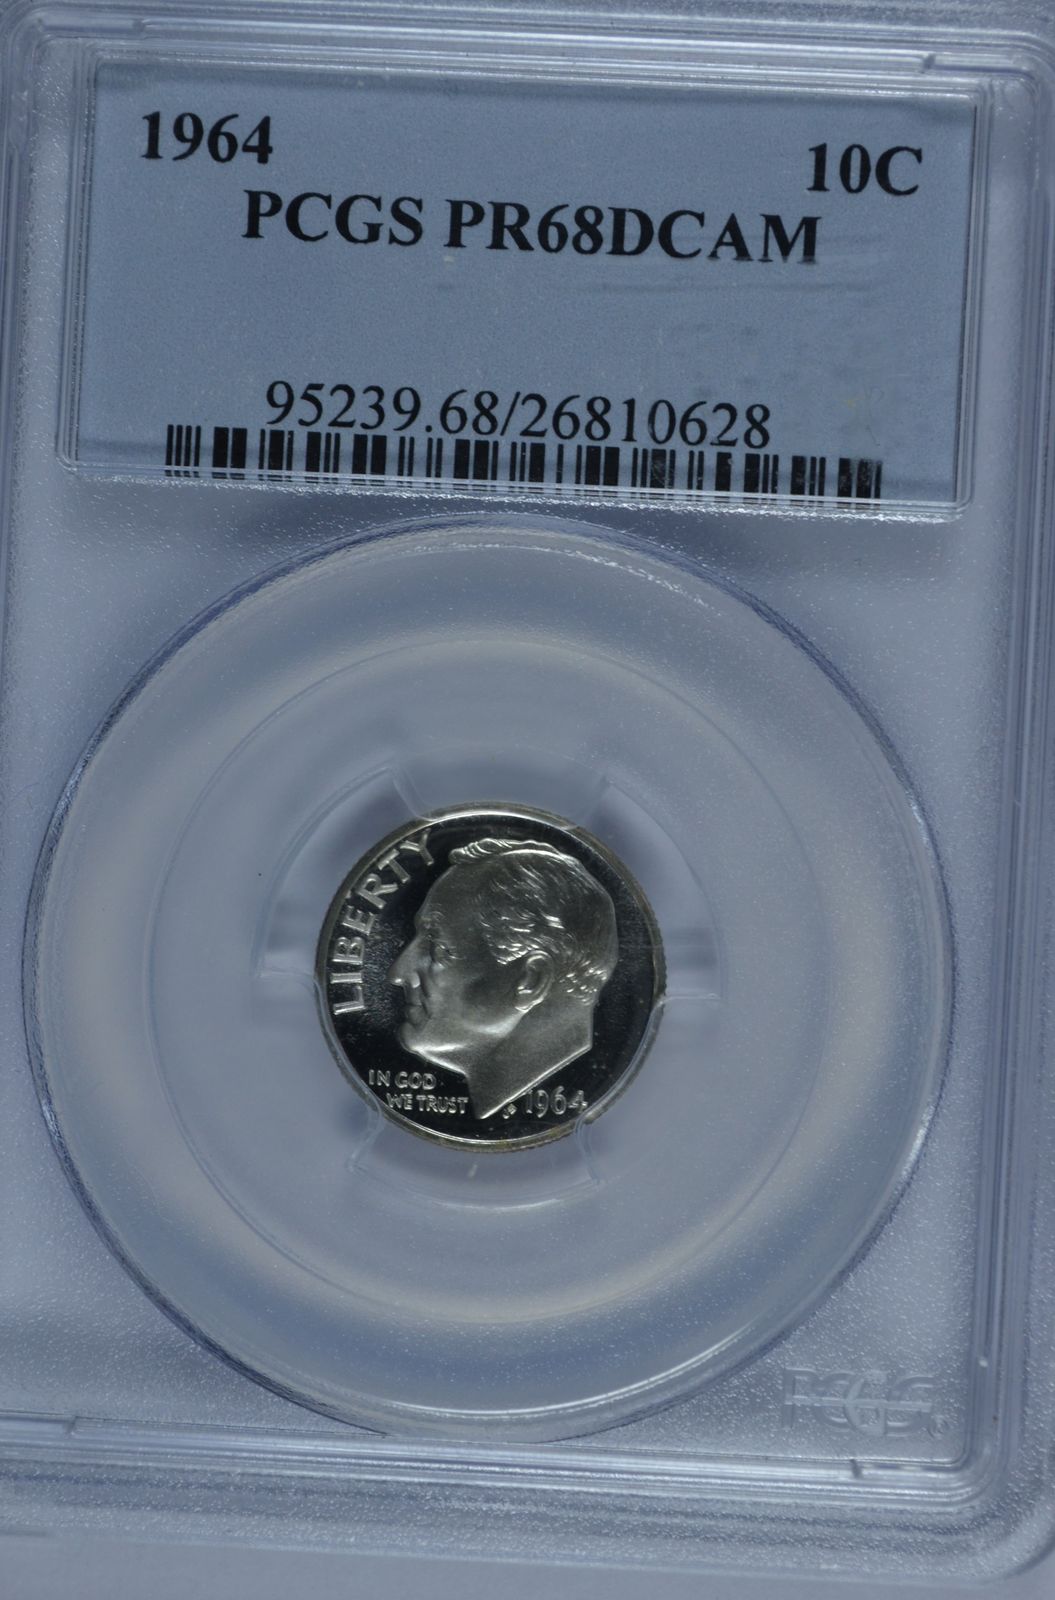 1964 Roosevelt proof silver dime PCGS PR68DCAM - $42.00